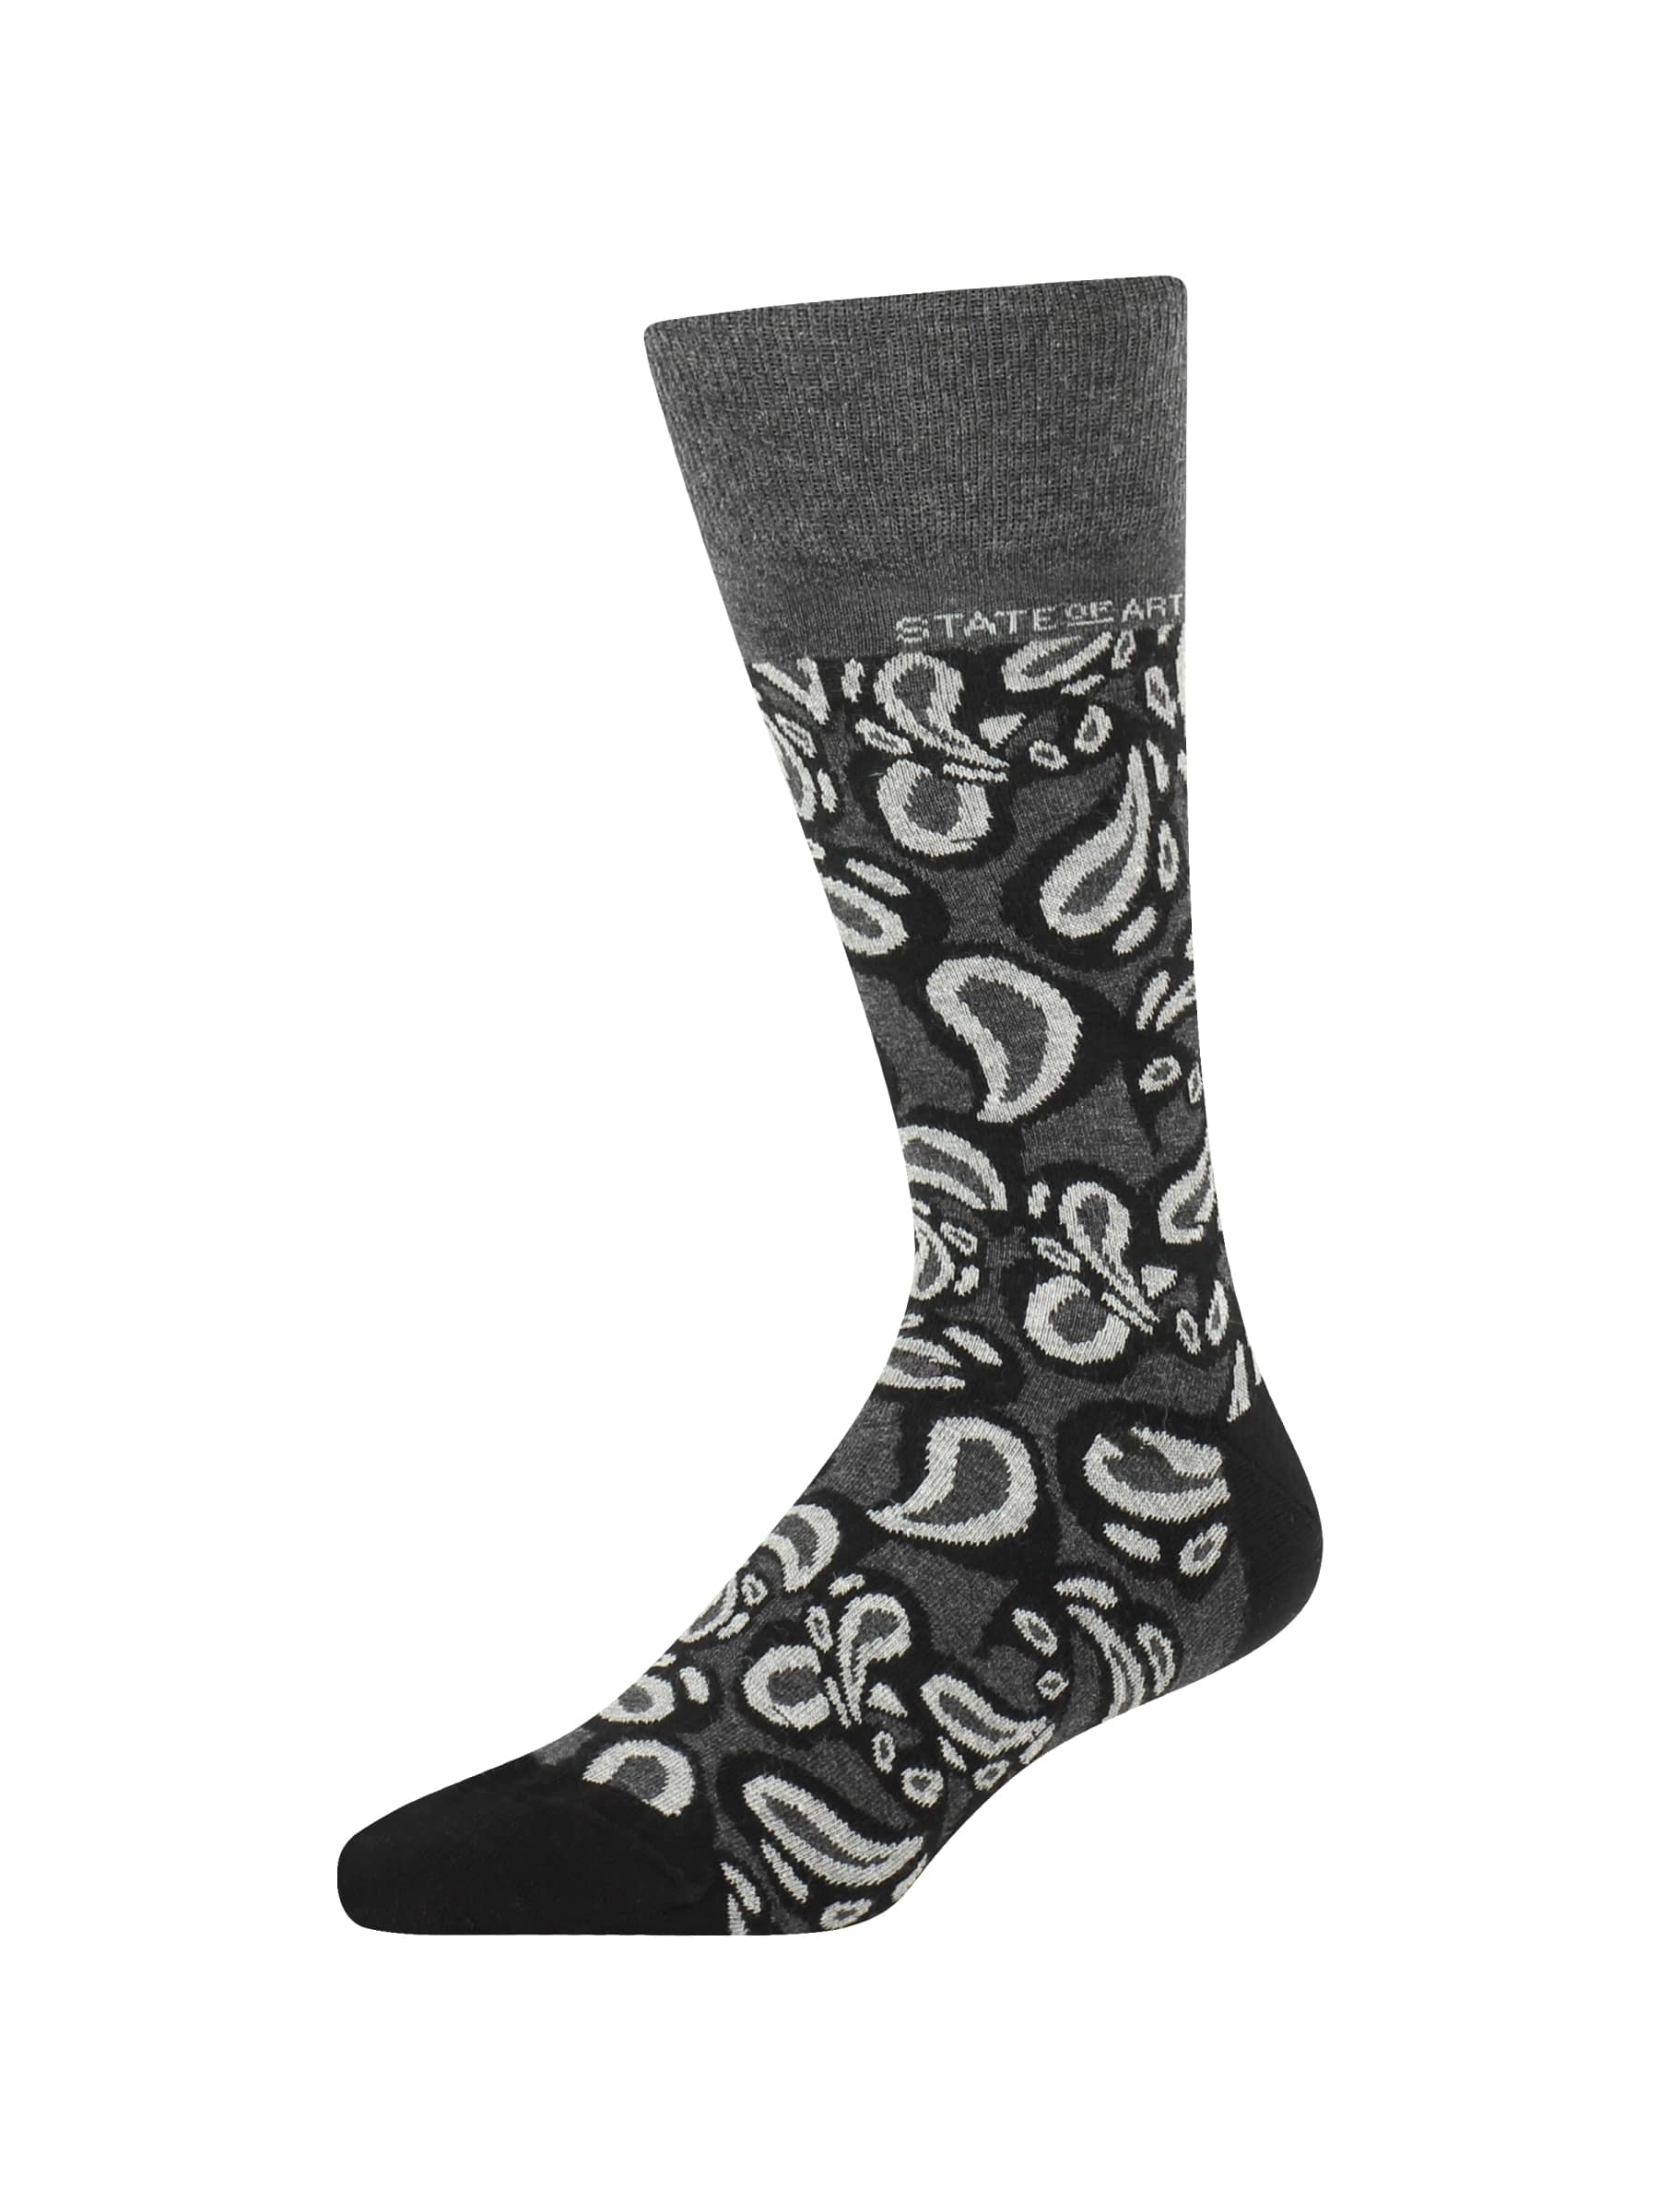 2 x Pairs of Mid Calf Length Sunarama Pop Socks Paisley Pattern Black